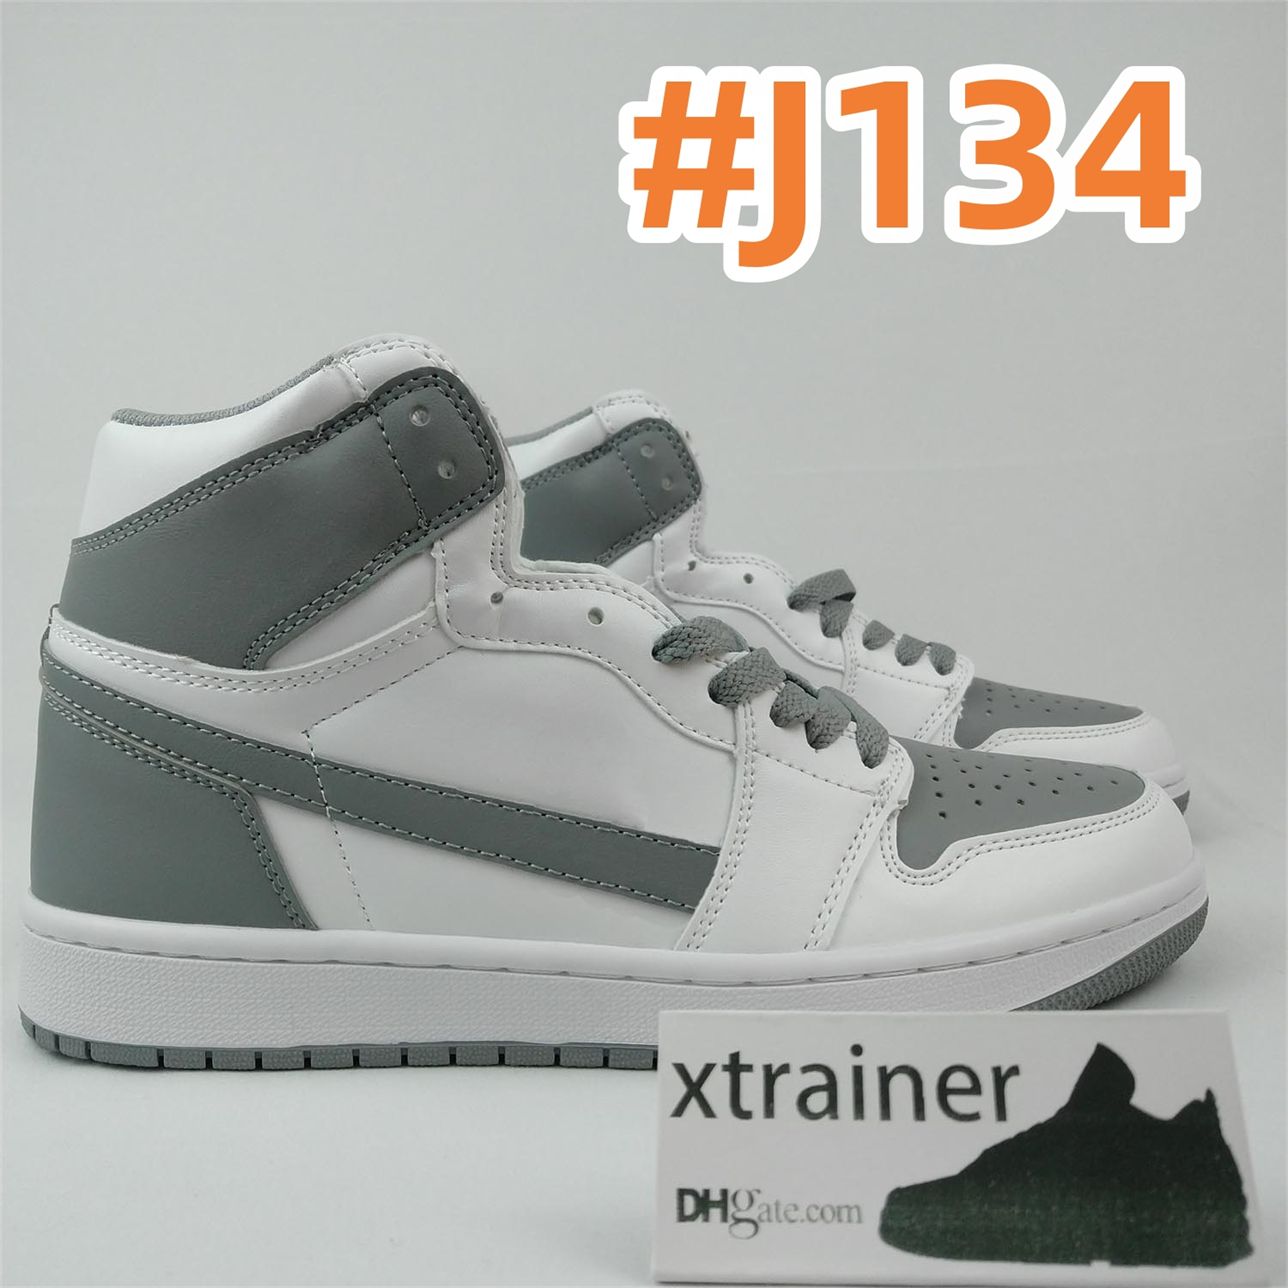 # J134